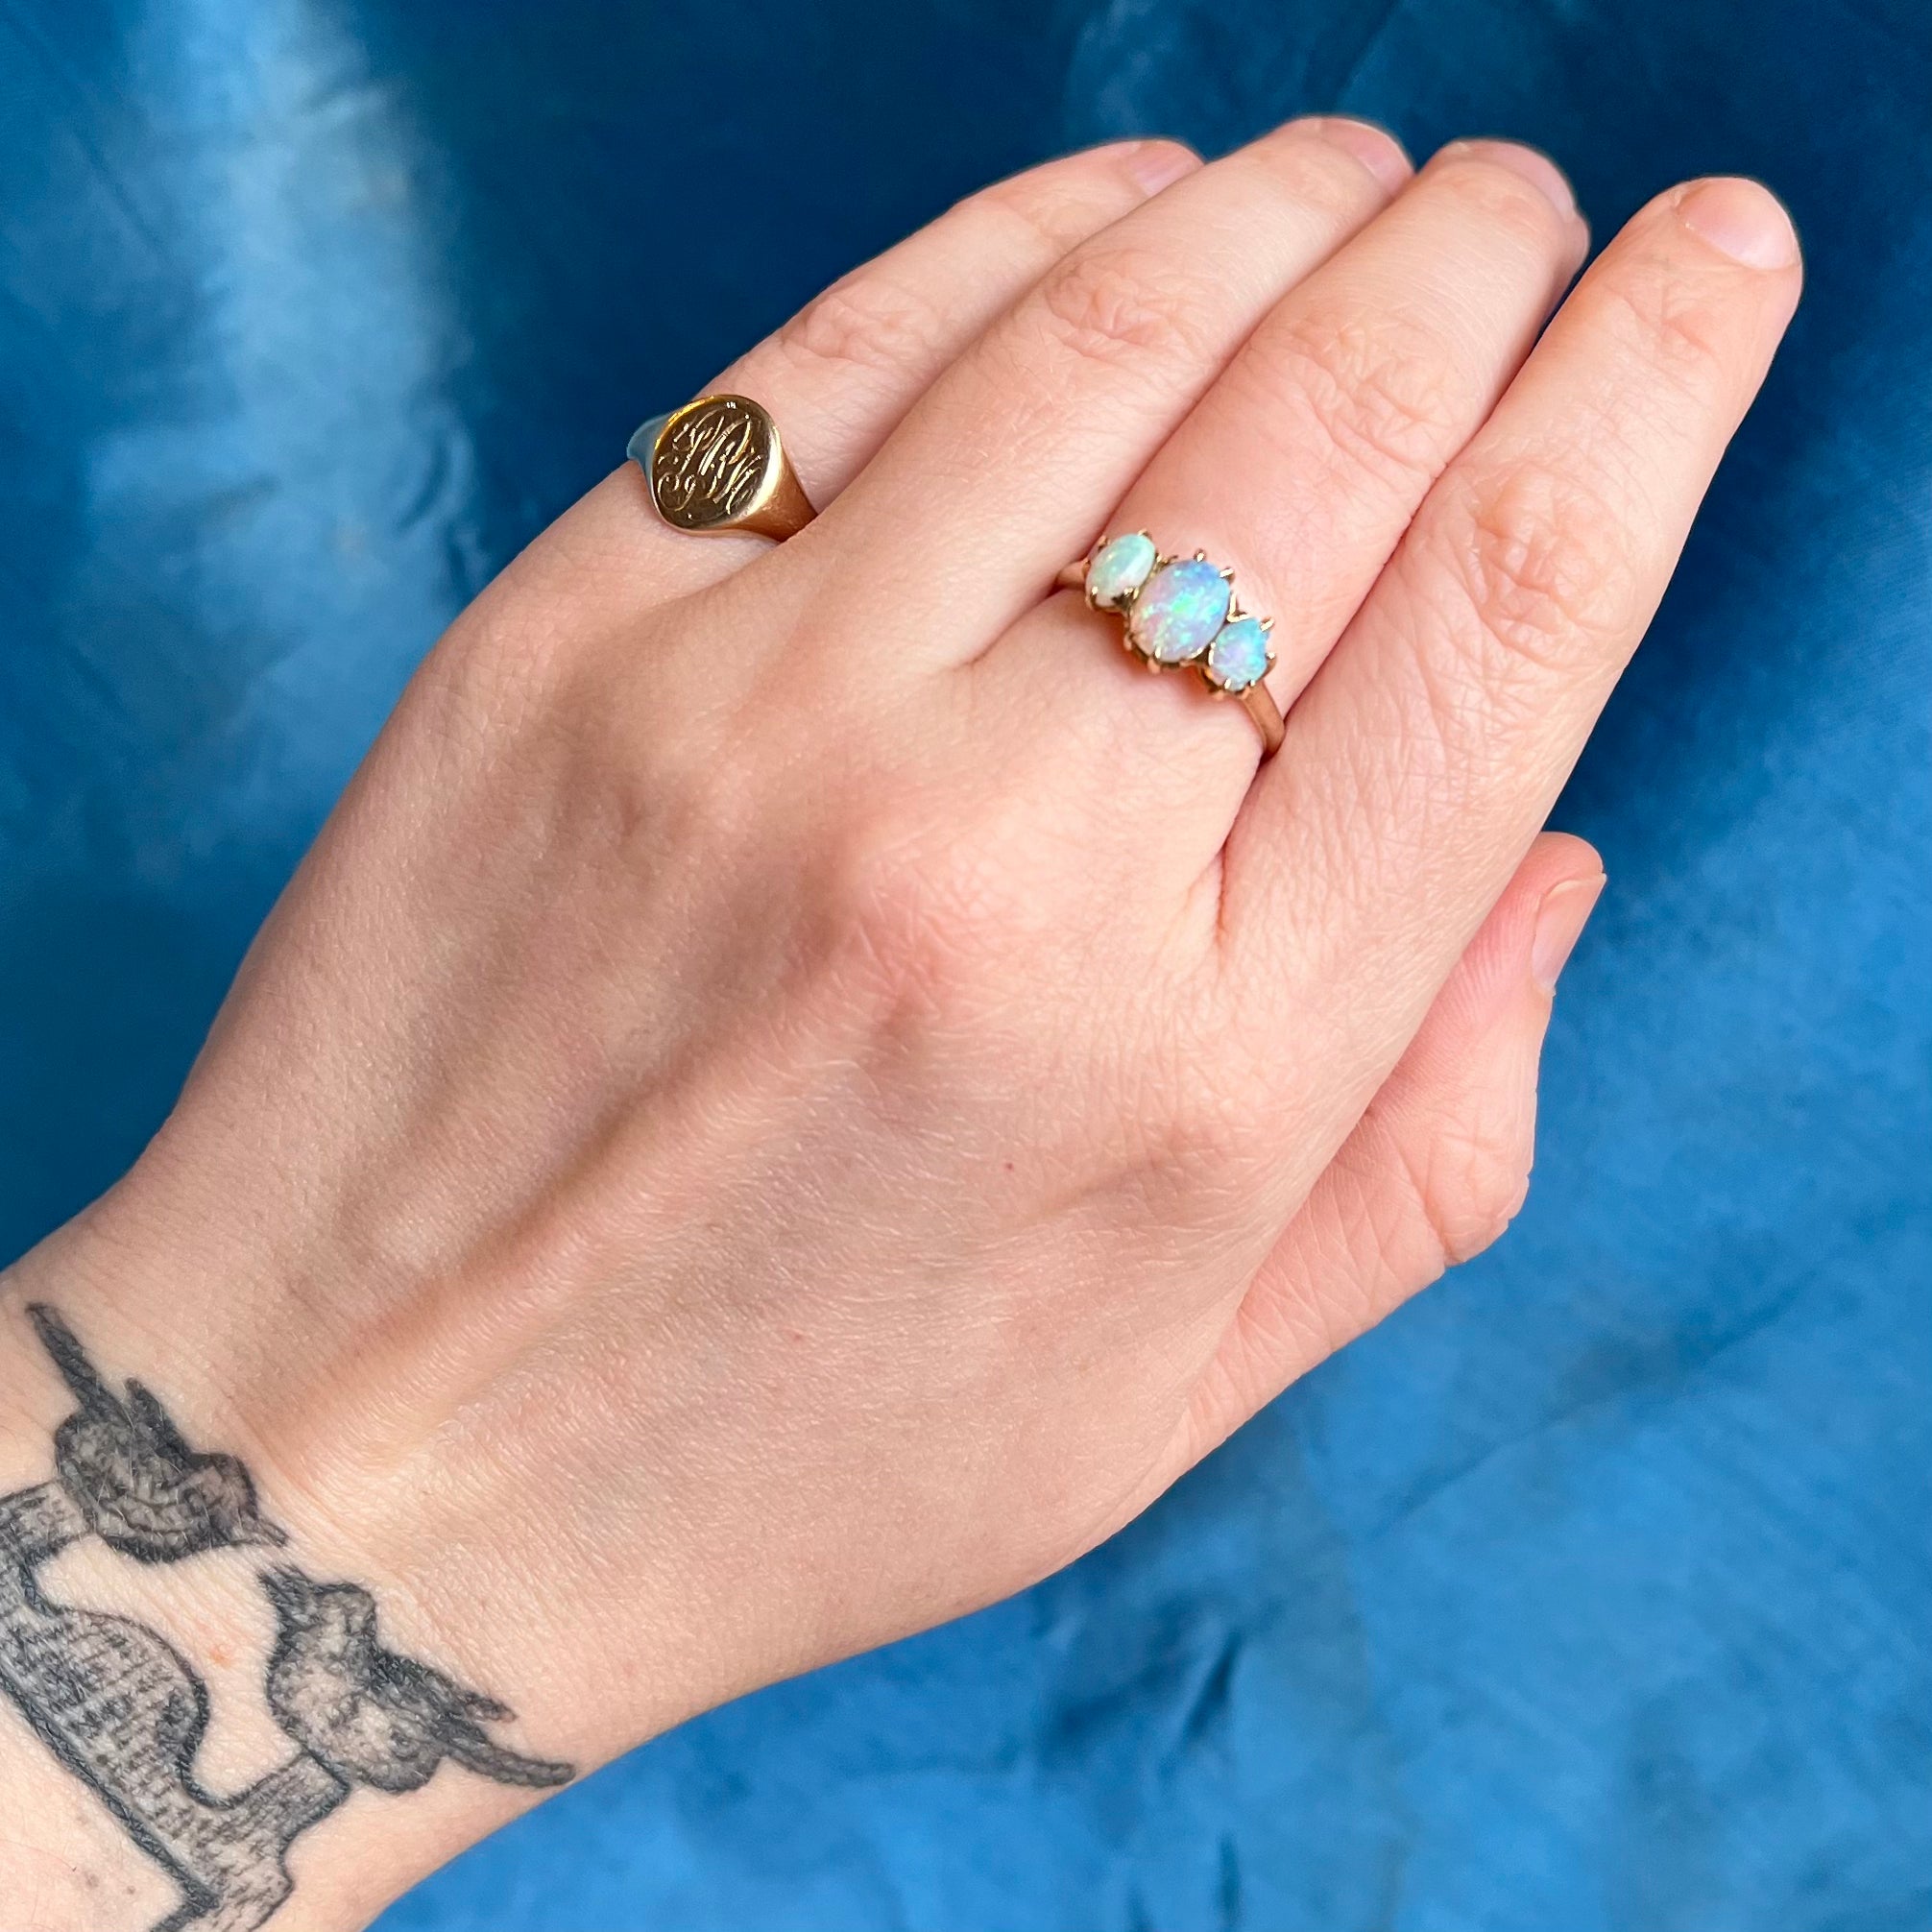 Antique Victorian 10k Gold Opal Trilogy Ring